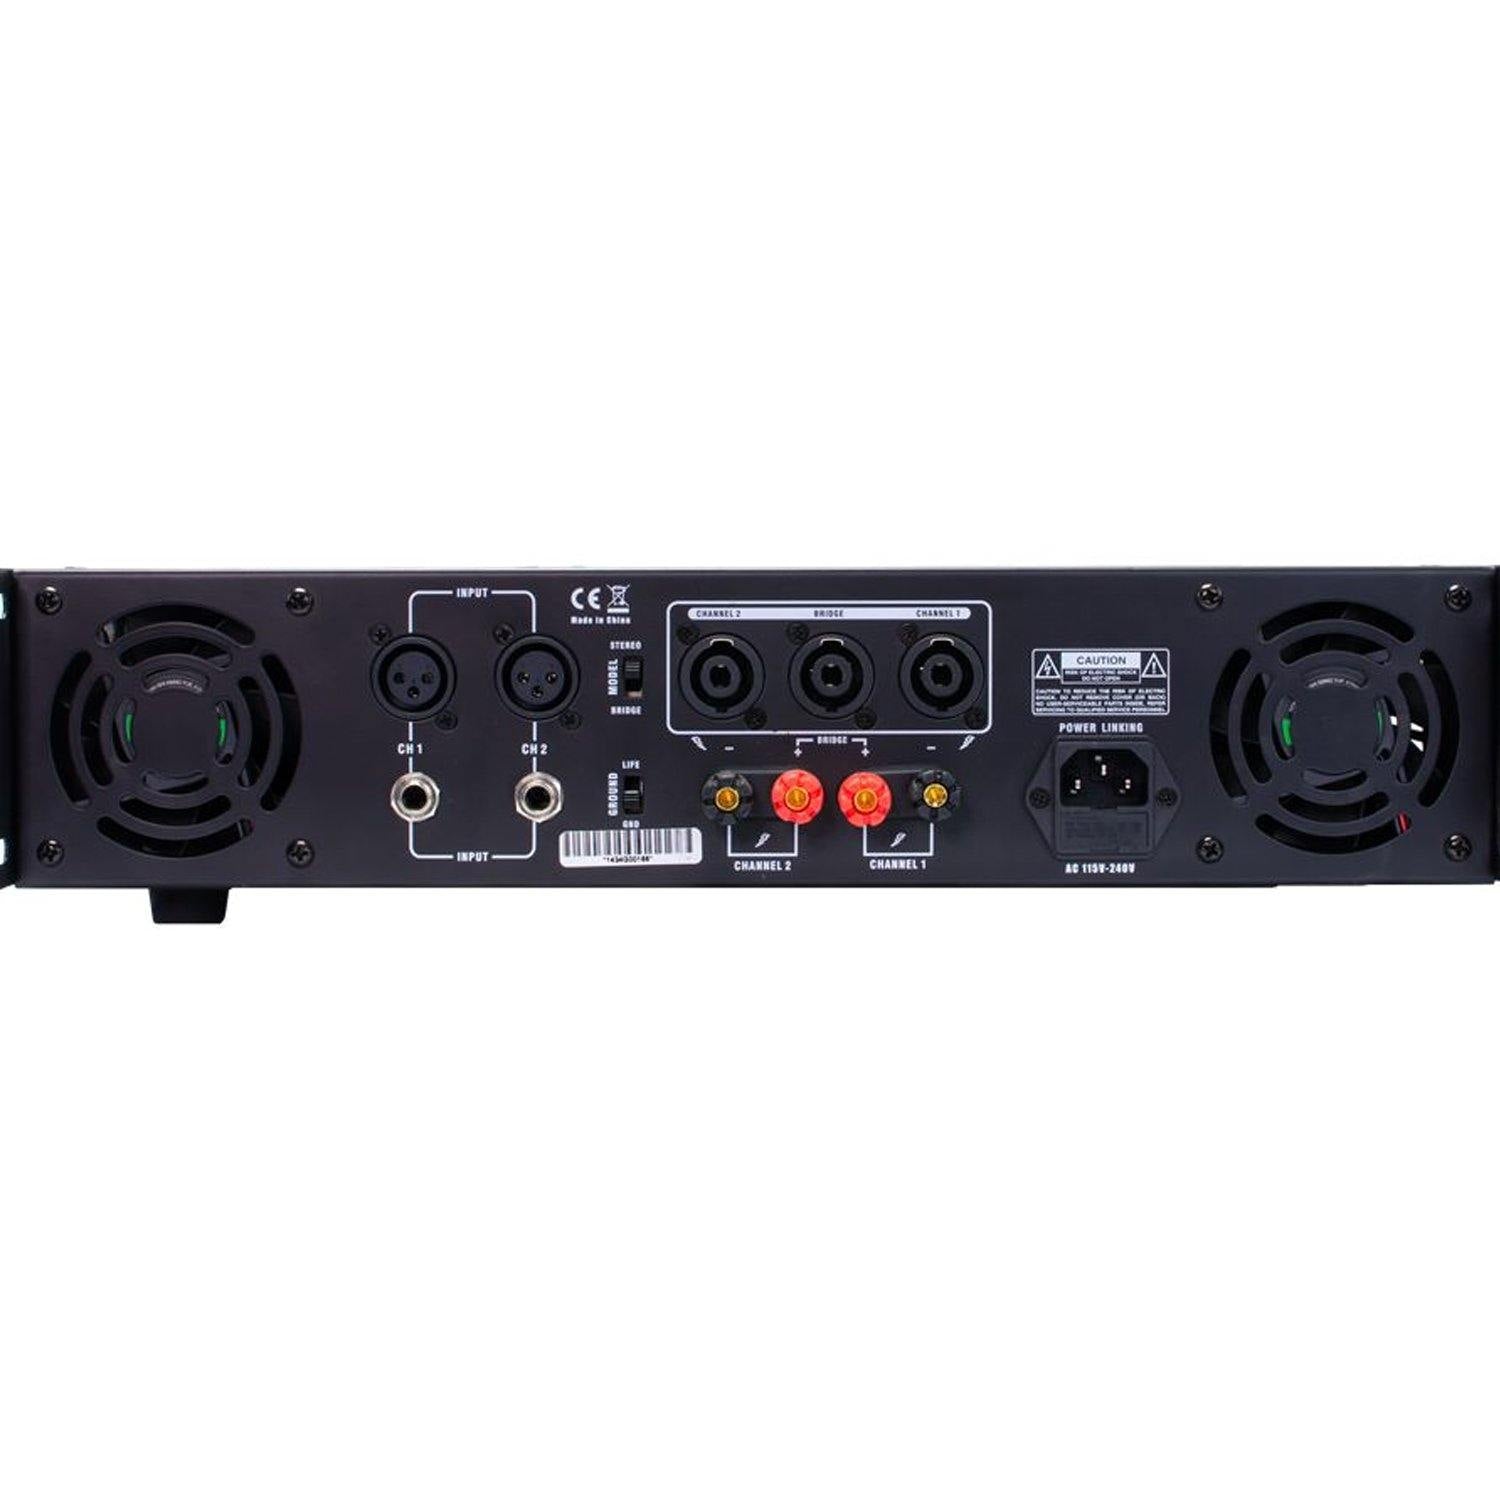 Gemini XGA-3000 Professional Power Amplifier 3000W - DY Pro Audio